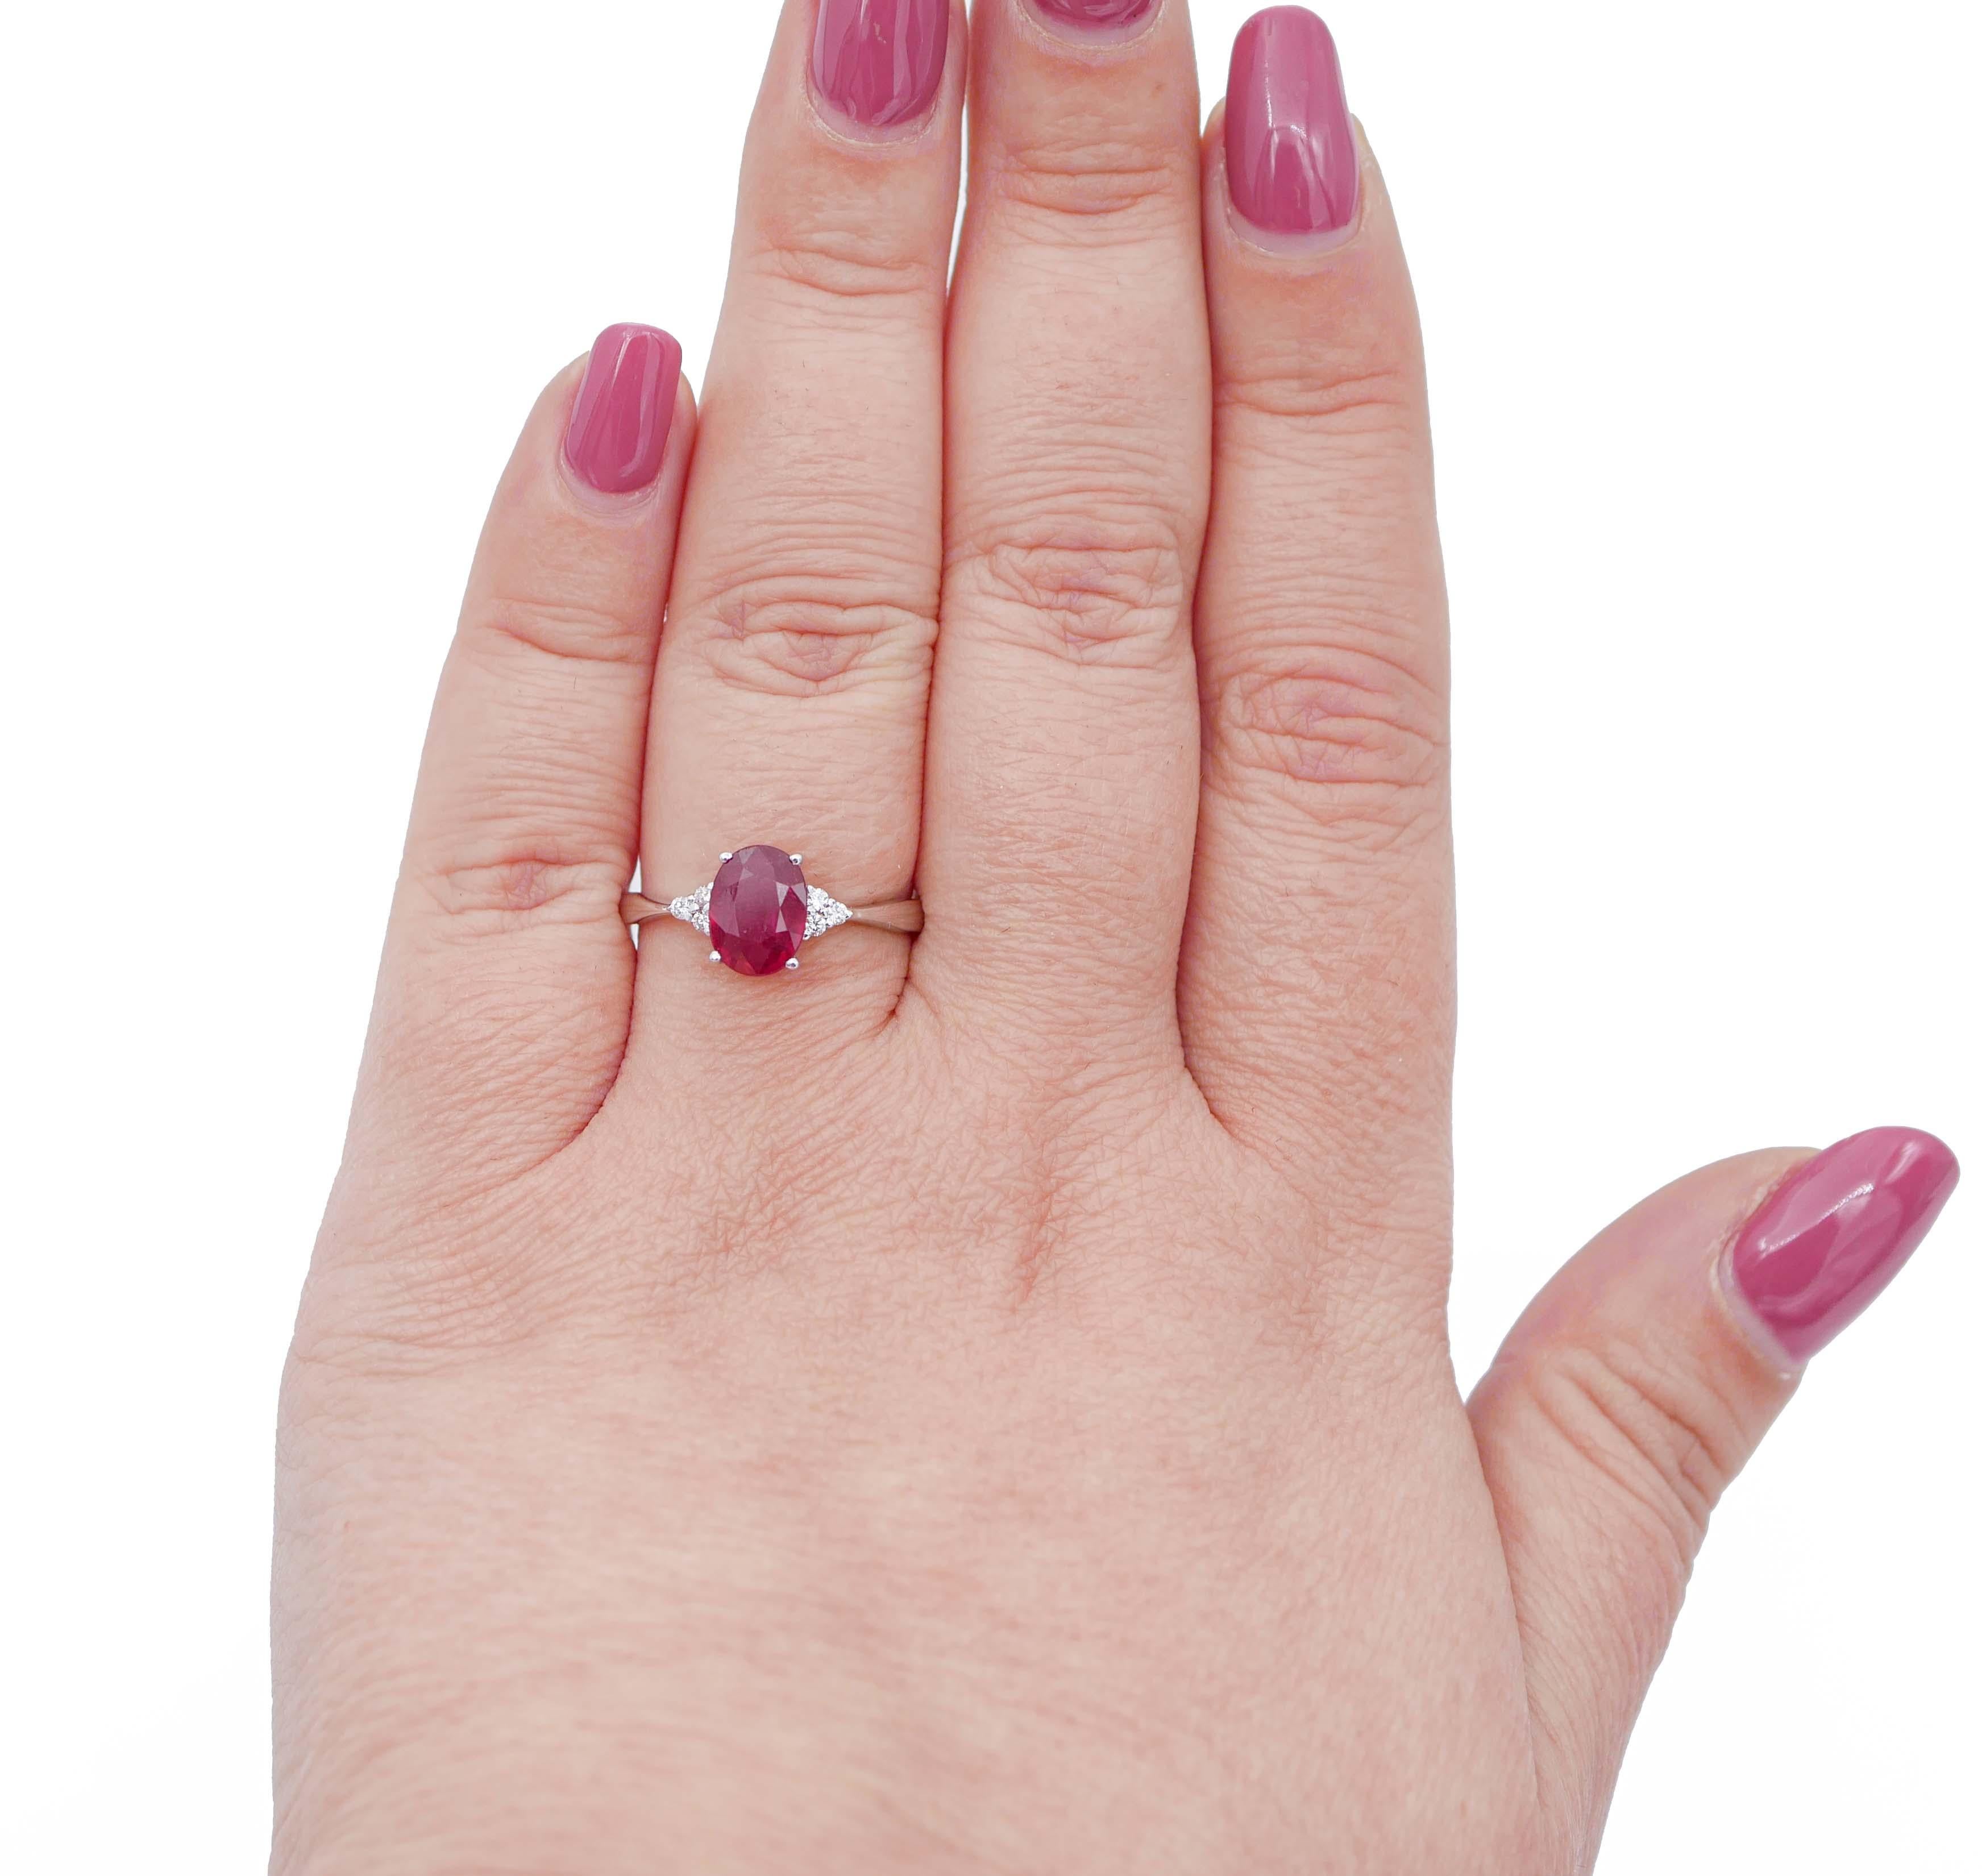 Mixed Cut Ruby, Diamonds, 18 Karat White Gold Engagement Ring